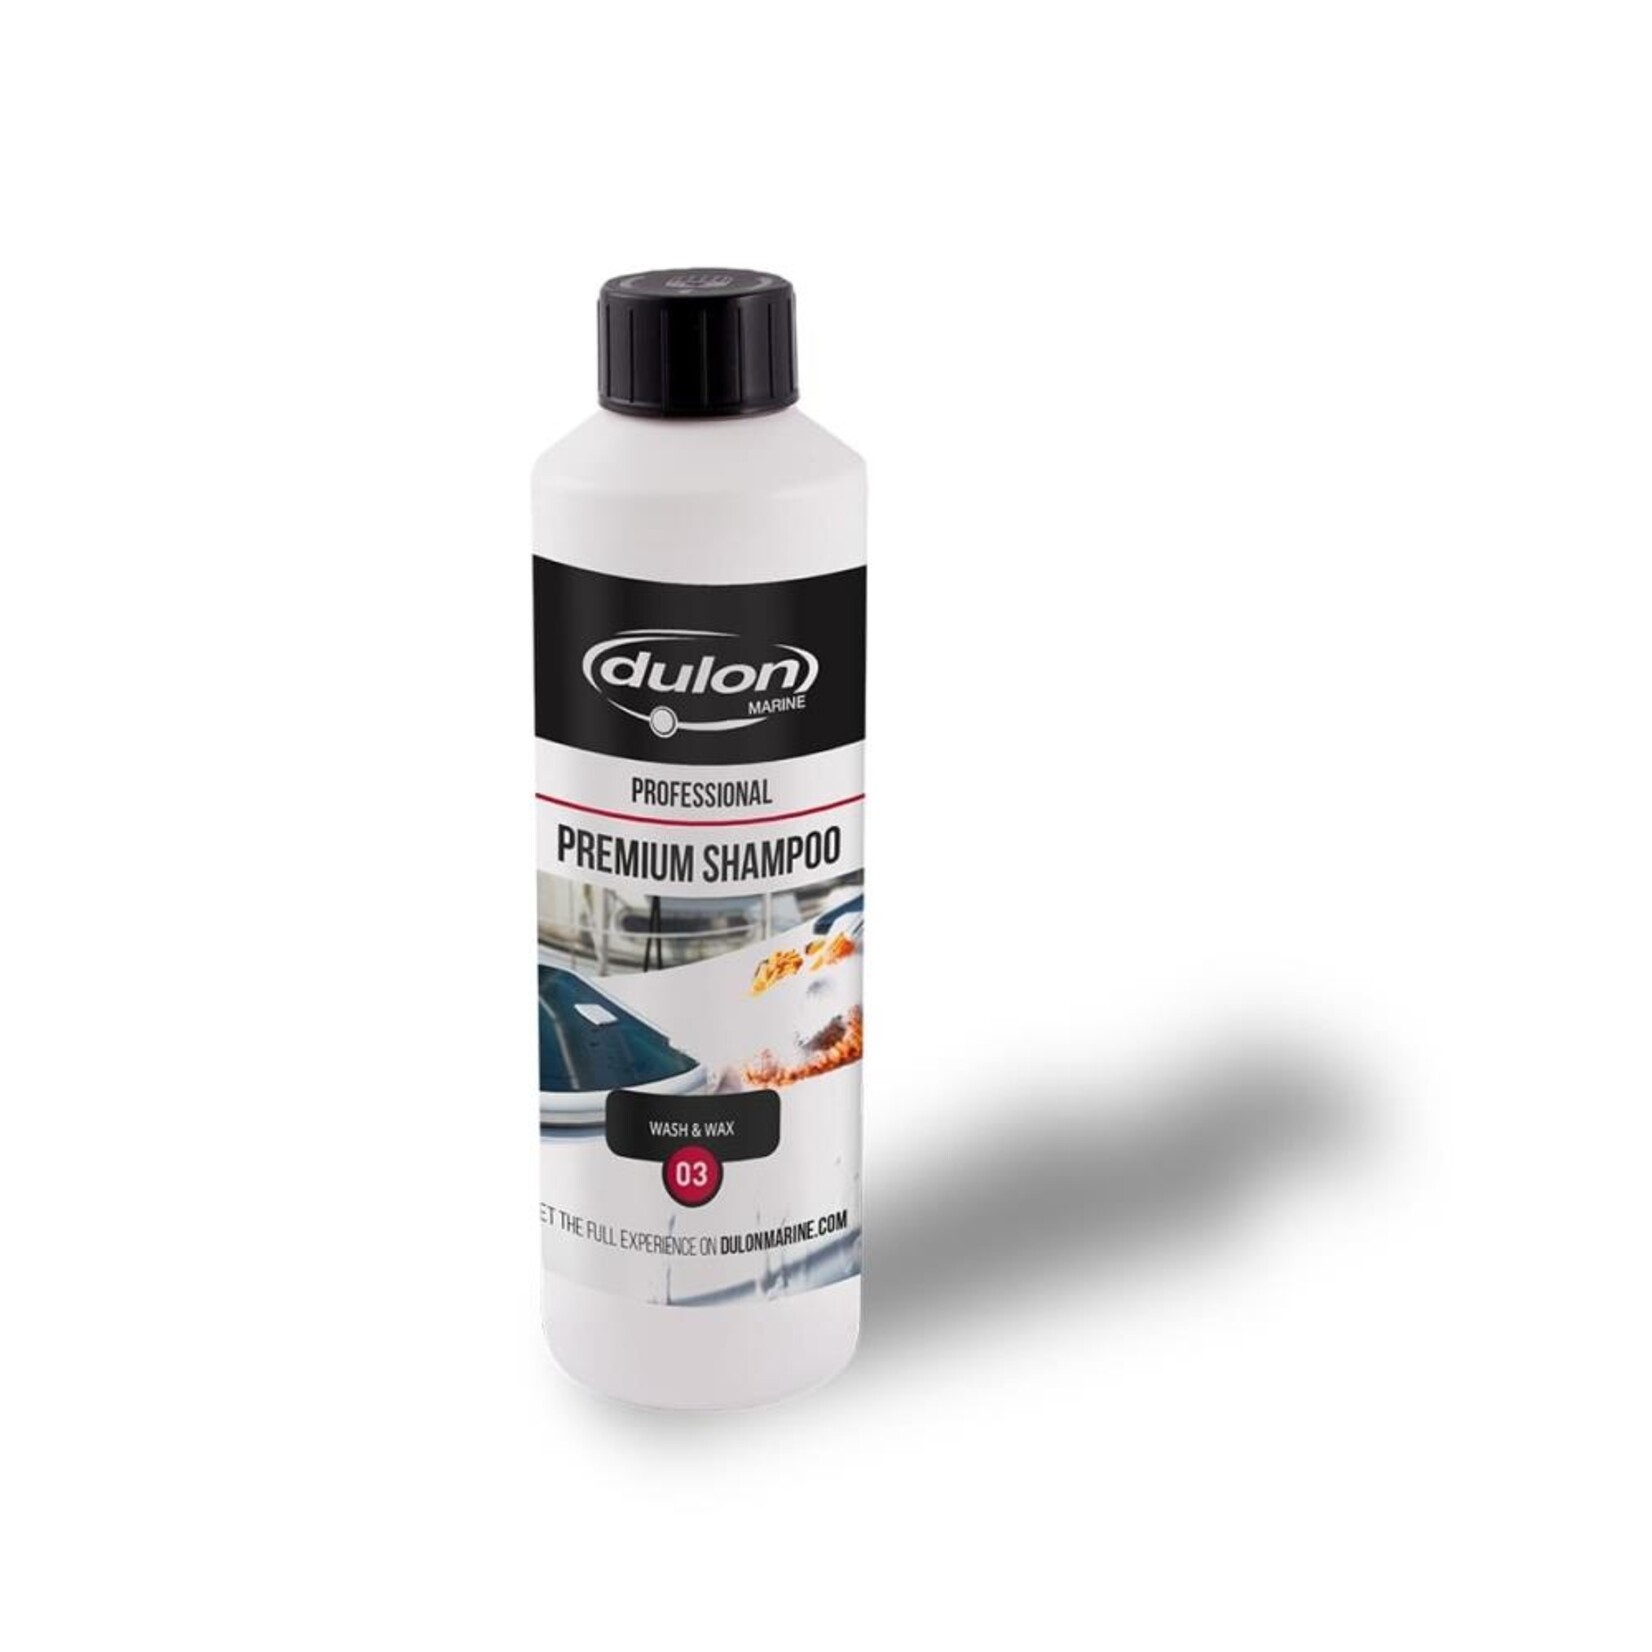 Dulon Marine Premium shampoo 03 - wash & wax 0.5 ltr